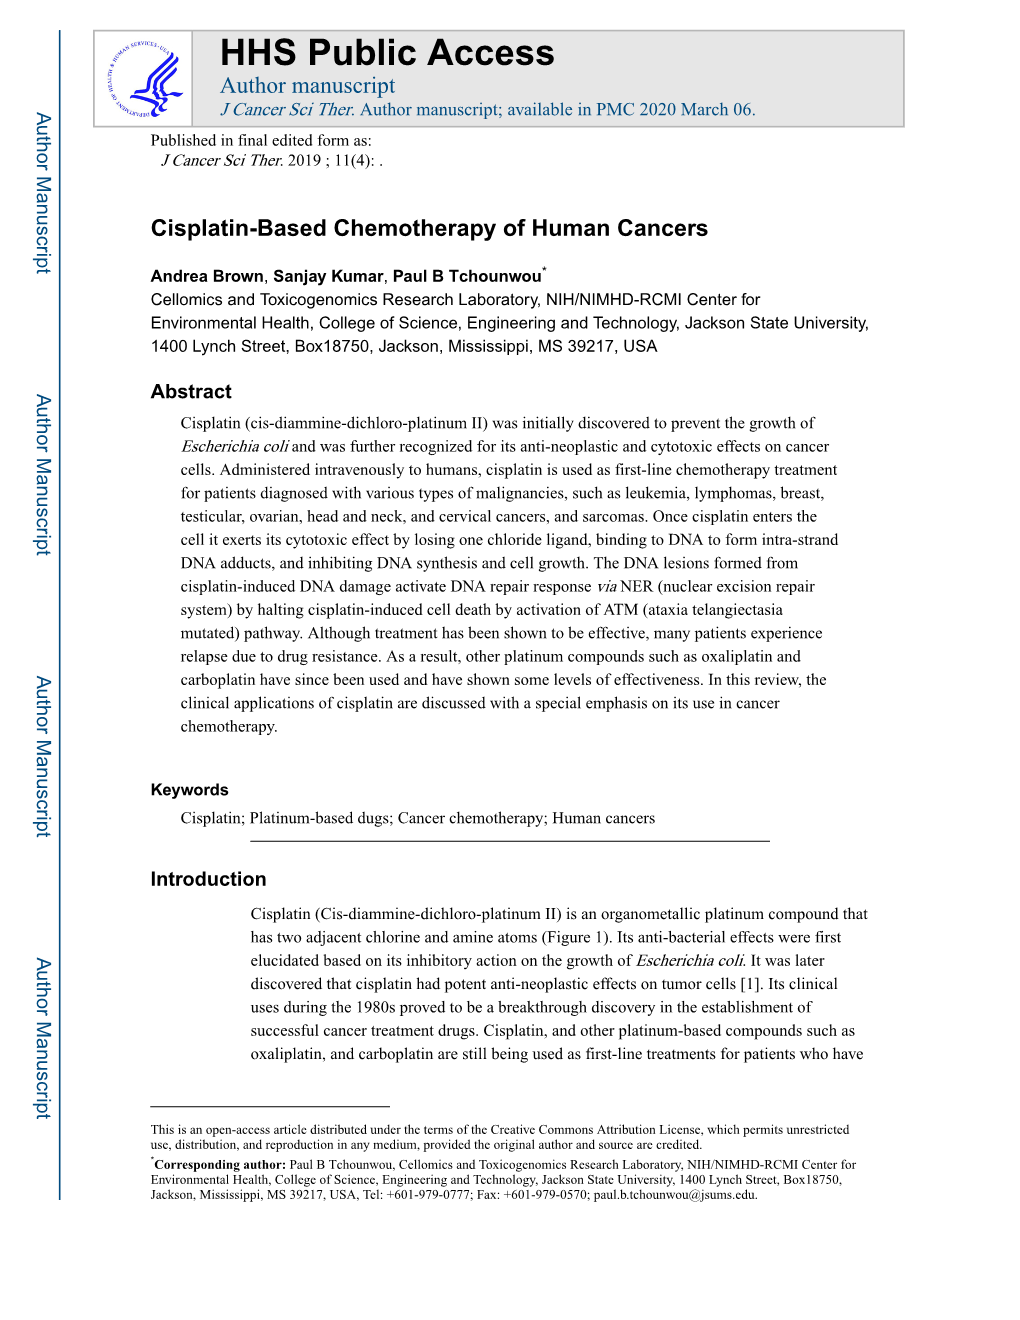 Cisplatin-Based Chemotherapy of Human Cancers